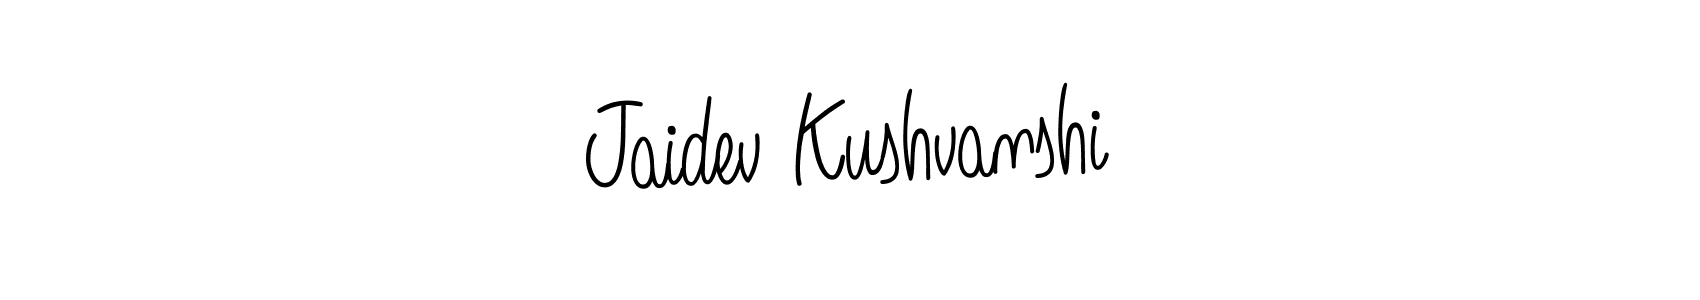 Make a beautiful signature design for name Jaidev Kushvanshi. Use this online signature maker to create a handwritten signature for free. Jaidev Kushvanshi signature style 5 images and pictures png